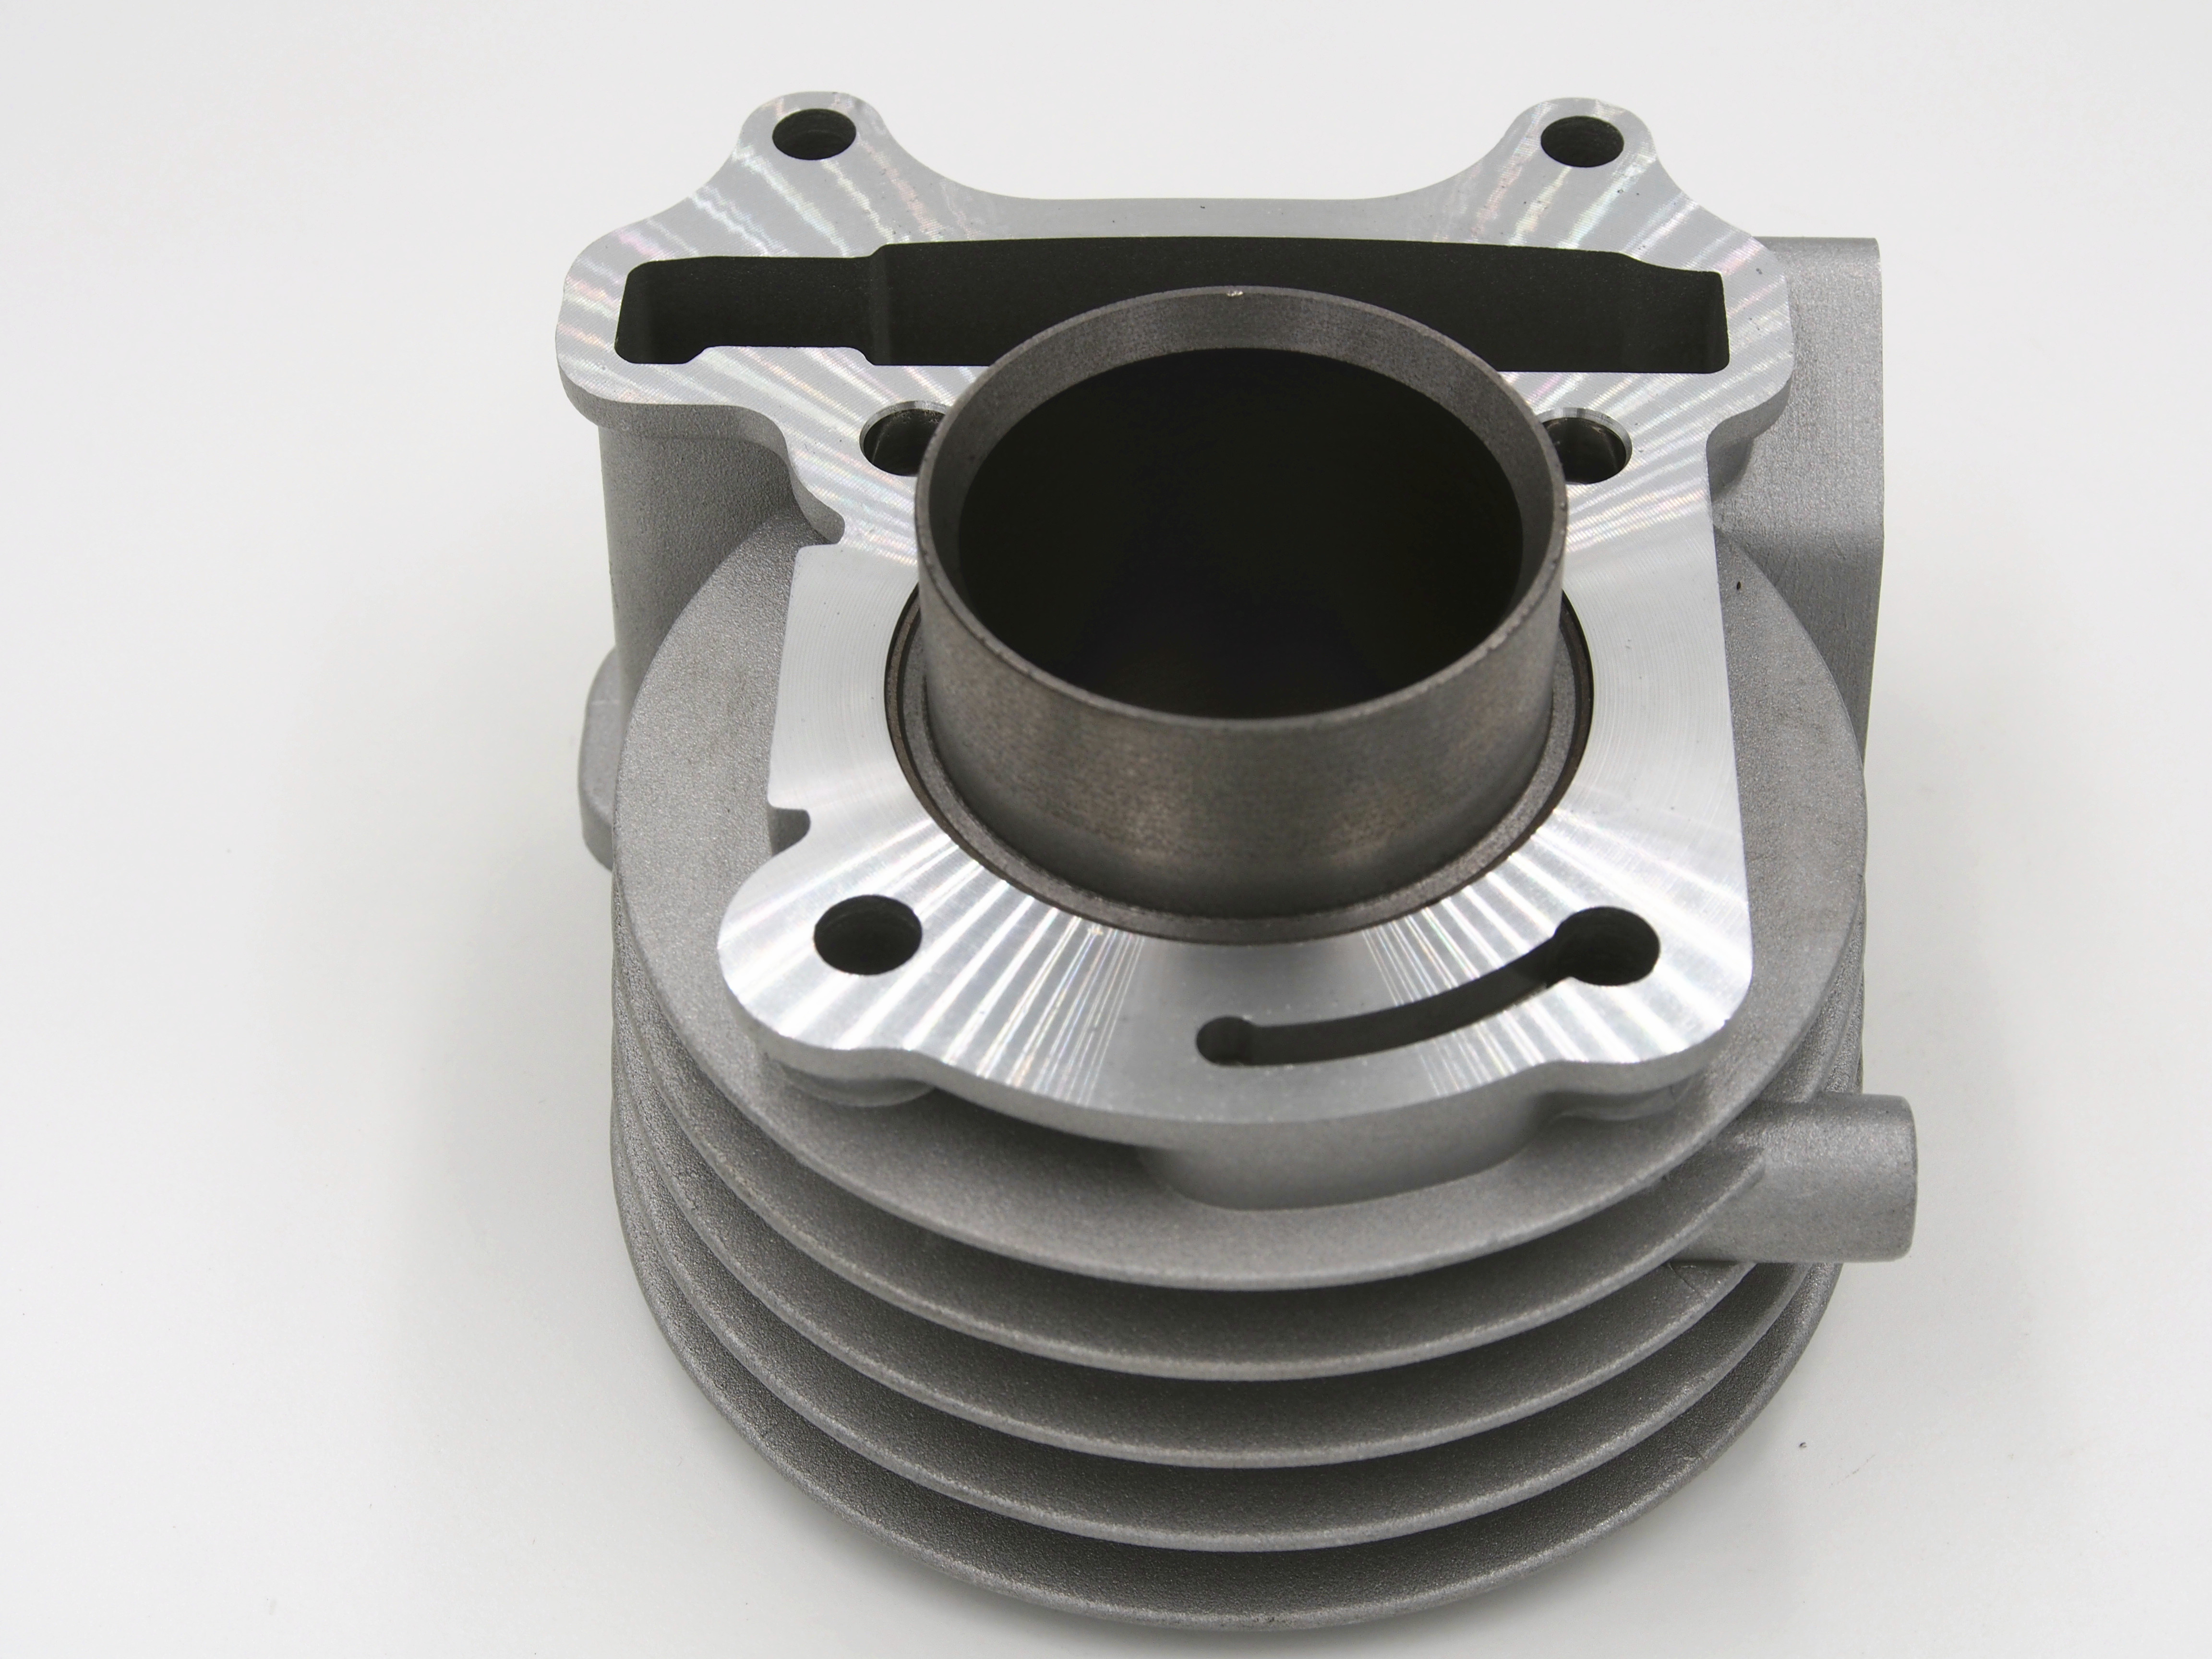 Motorcycle Cylinder Aluminum Engine Block Kit For Honda Halma Series